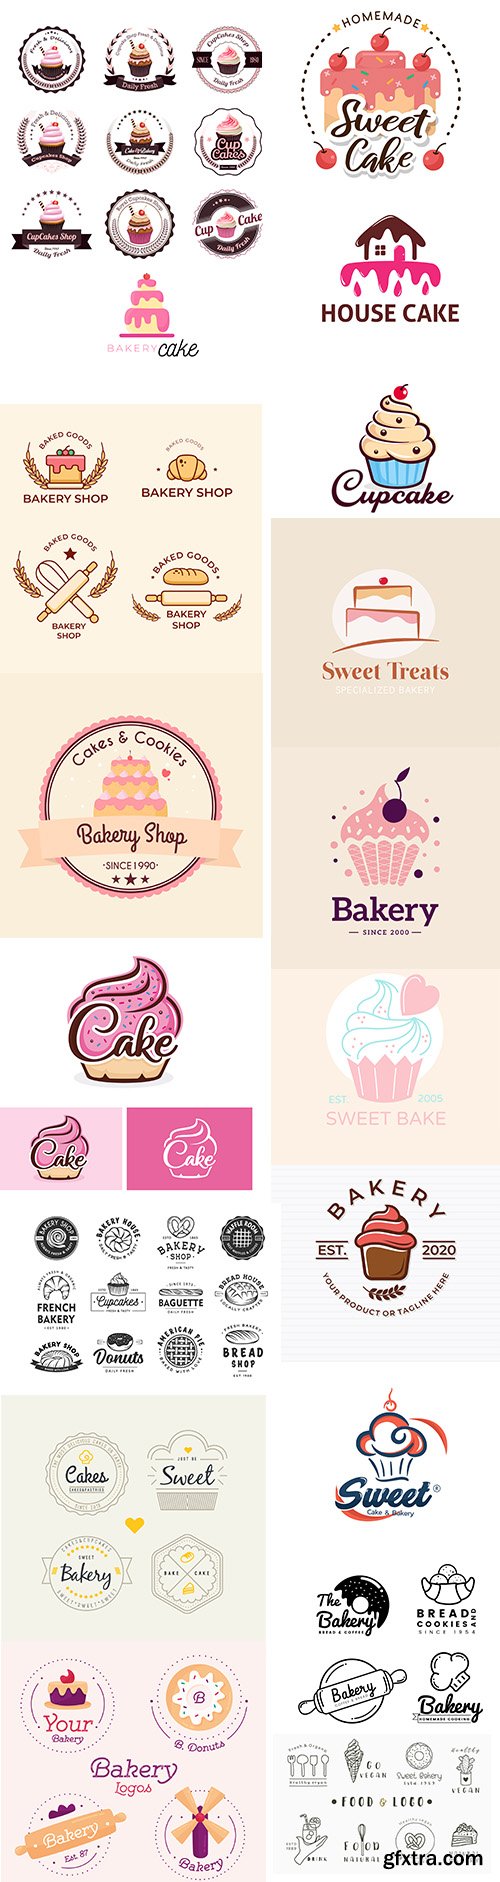 Bakery cake logo template collection